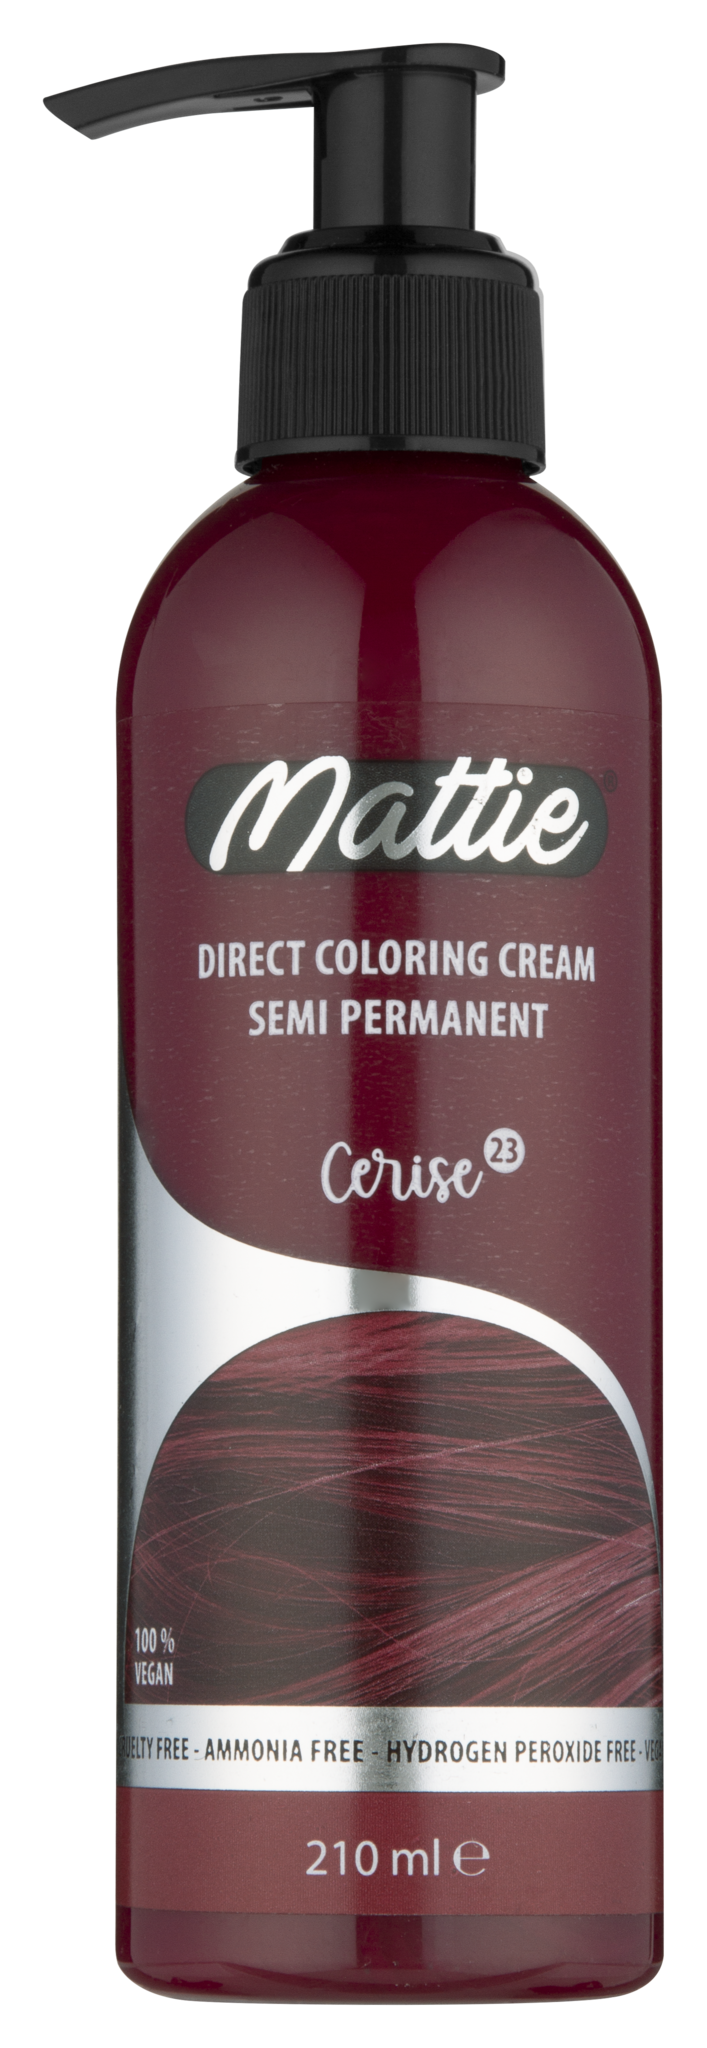 Mattie Direct Coloring Cream Semi-Permanent - Cerise 210ml